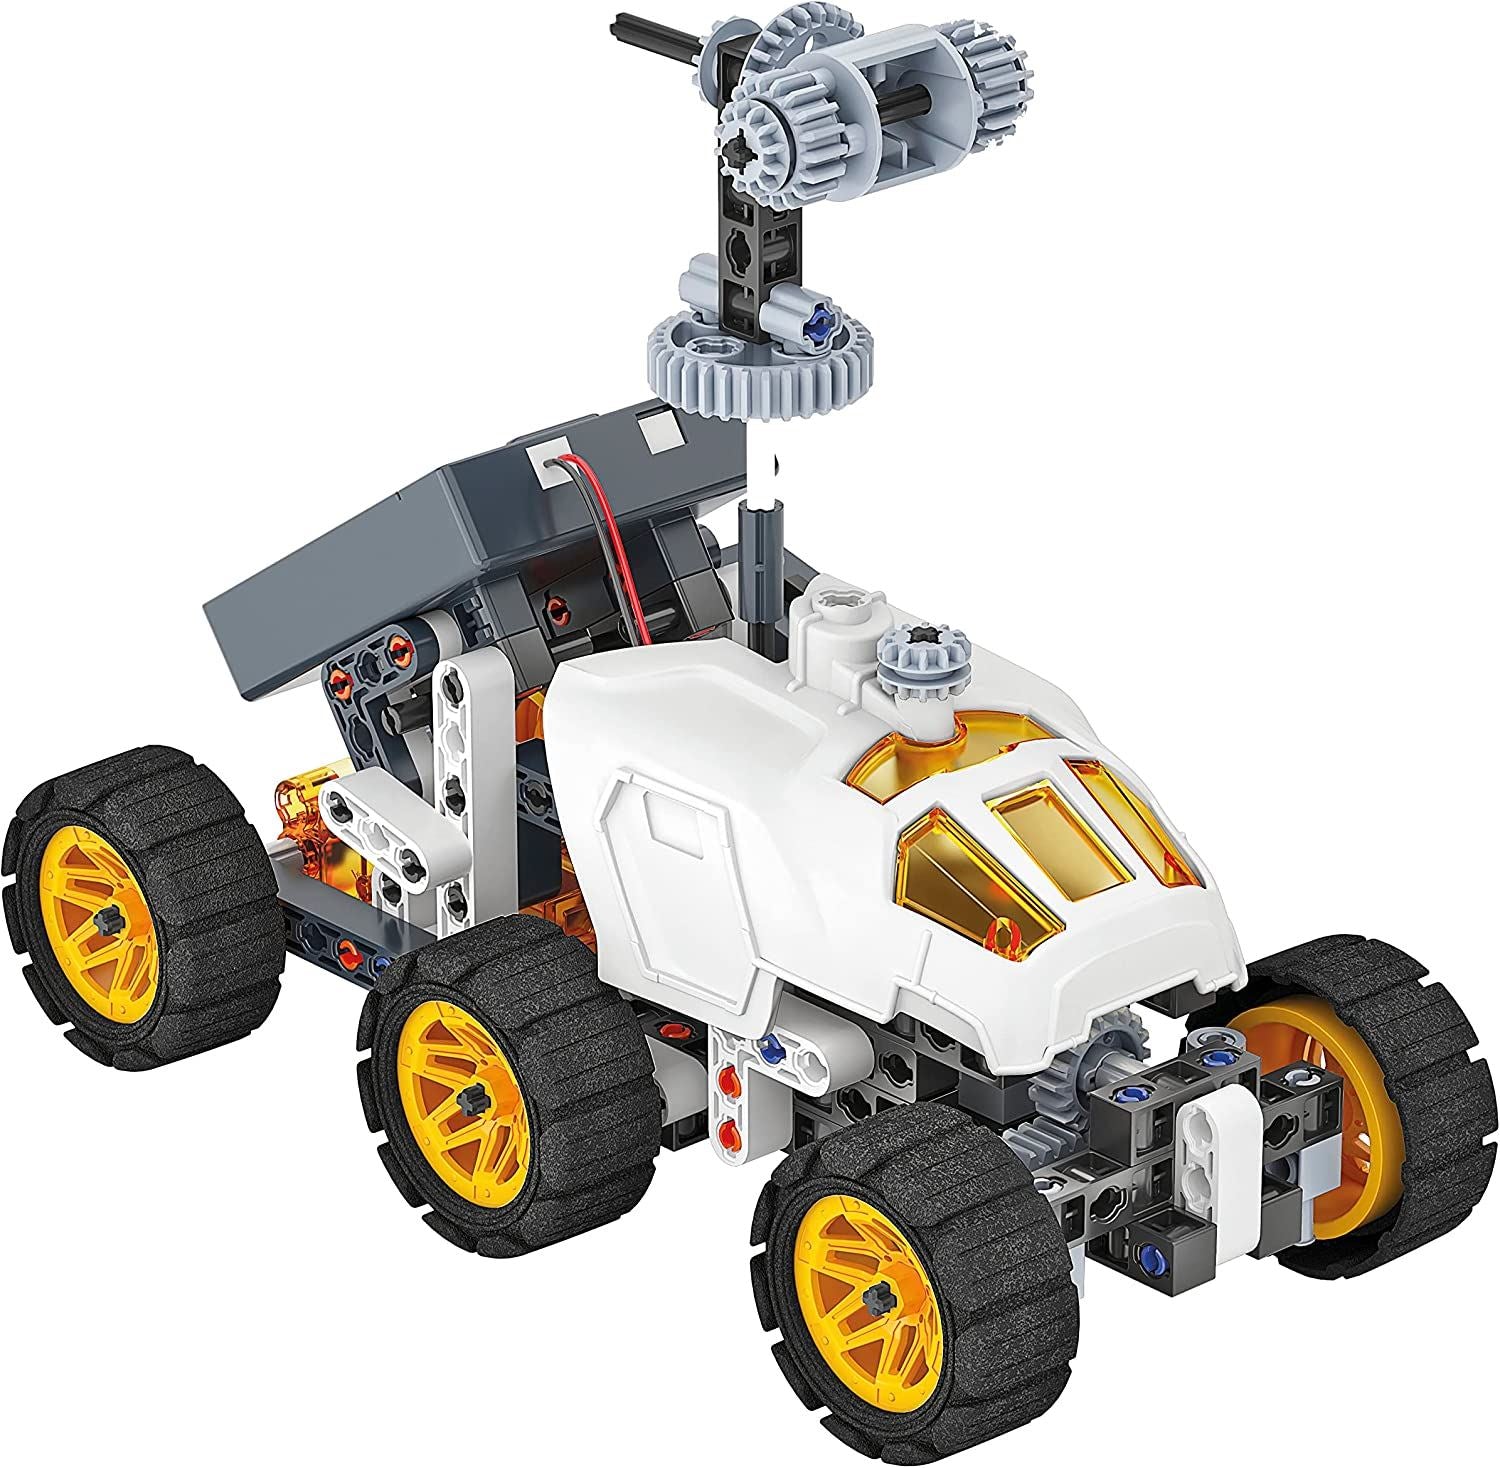 Mechanics Mars Rover